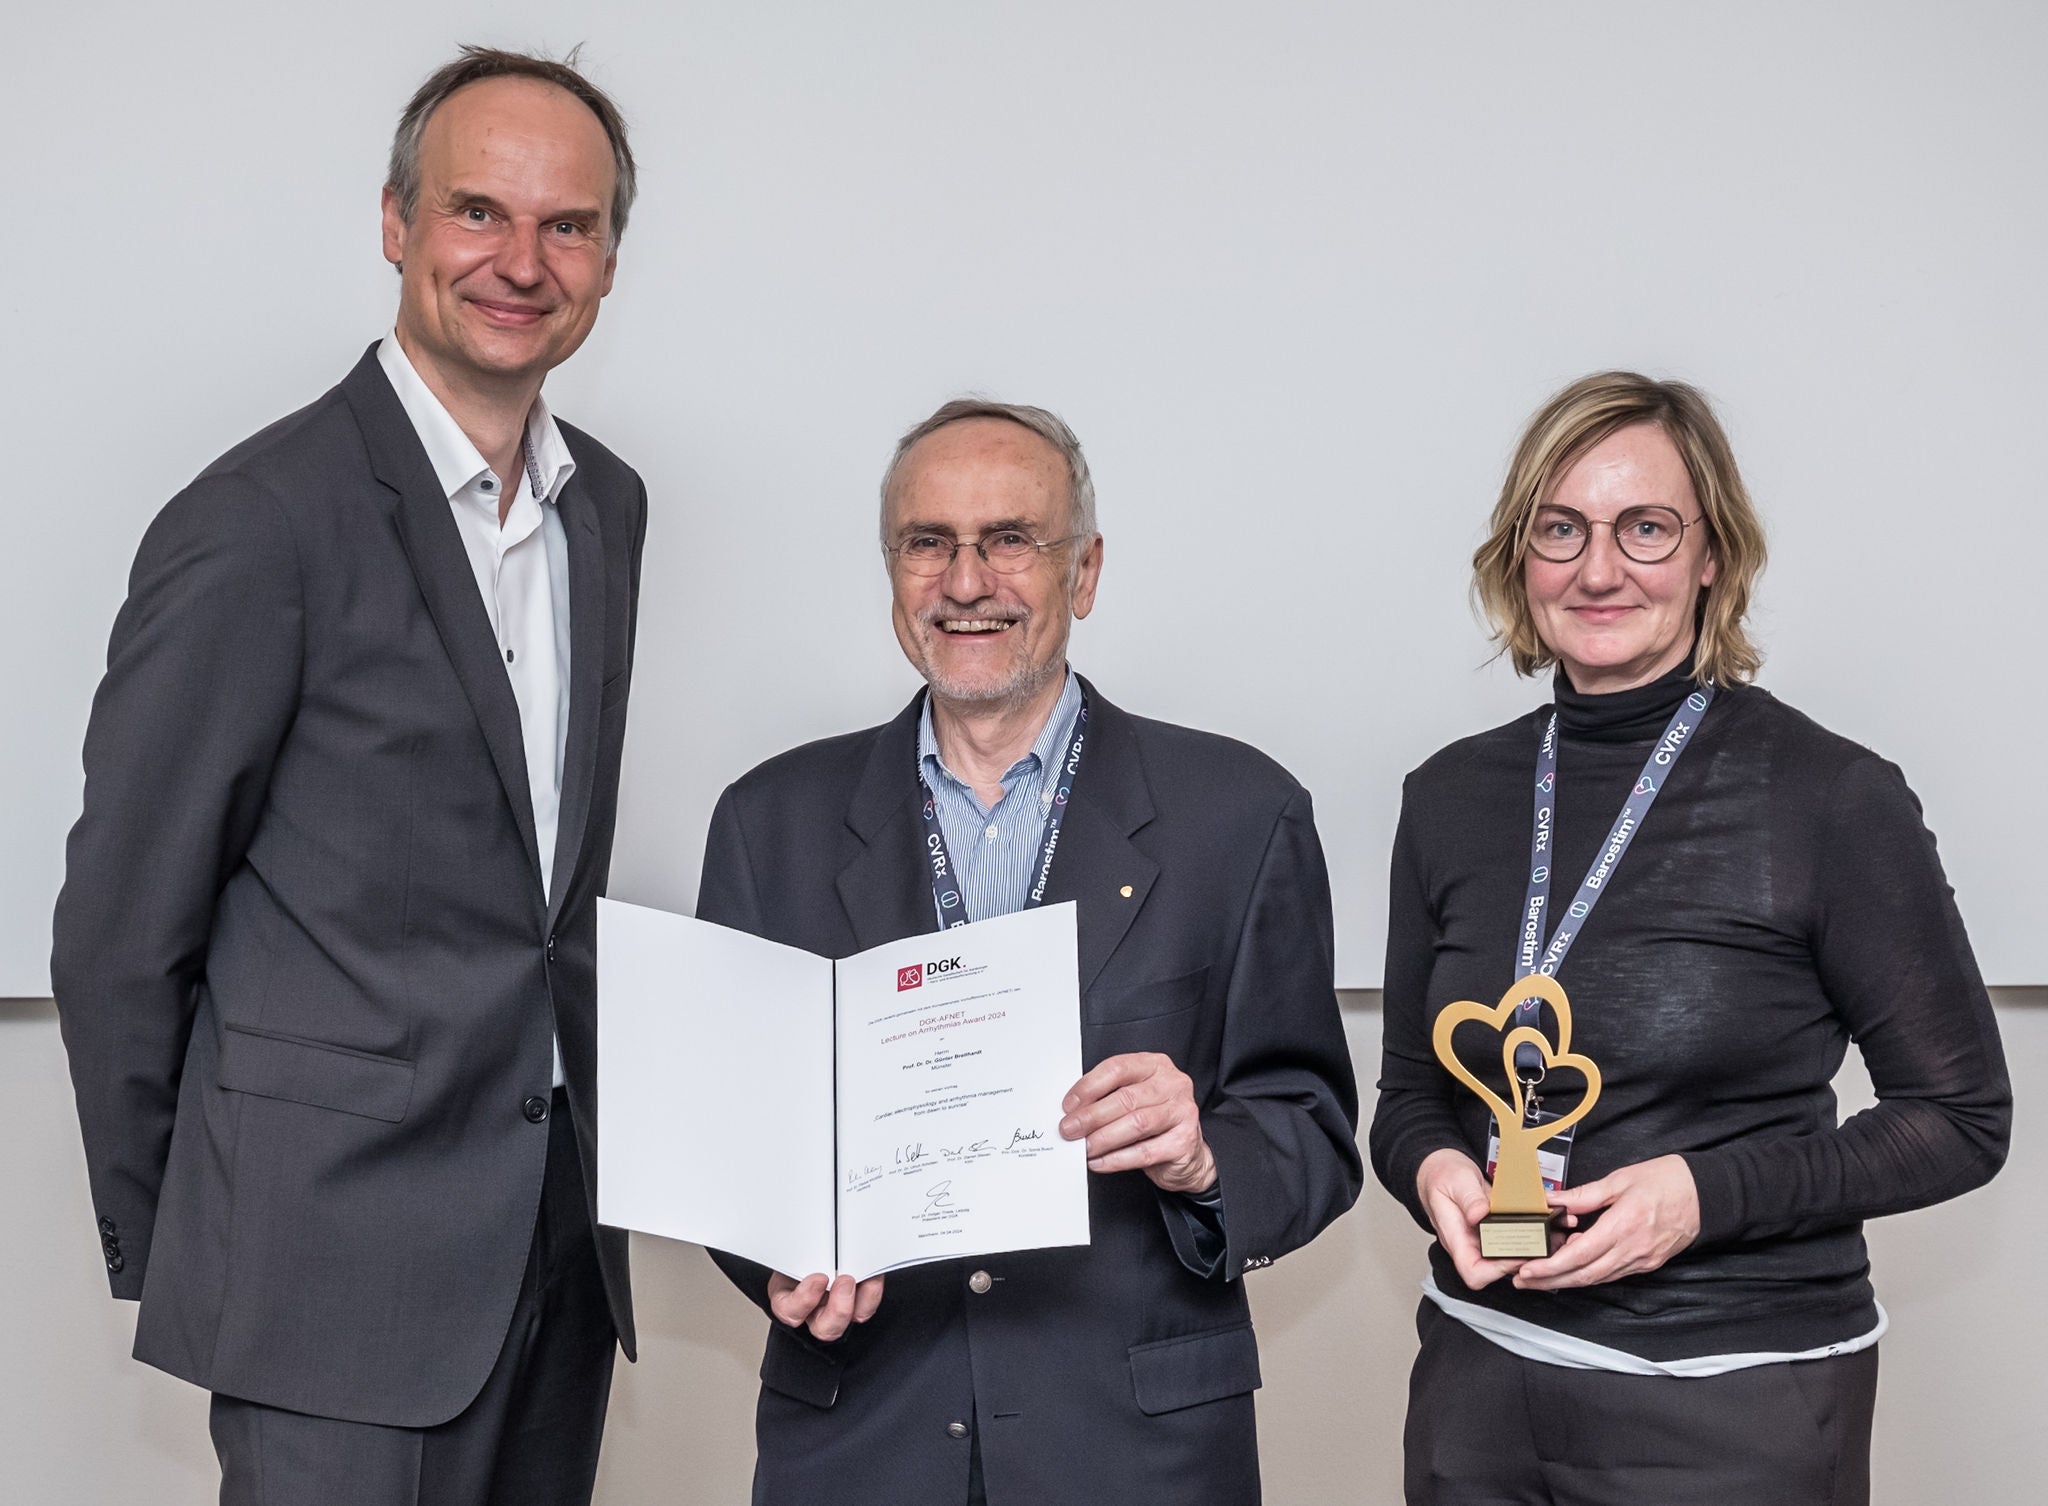 v.l.n.r. Prof. Dr. Paulus Kirchhof (AFNET), Preisträger Prof. Dr. Dr. h. c. Günter Breithardt, Dr. Ines Gröner (AFNET)